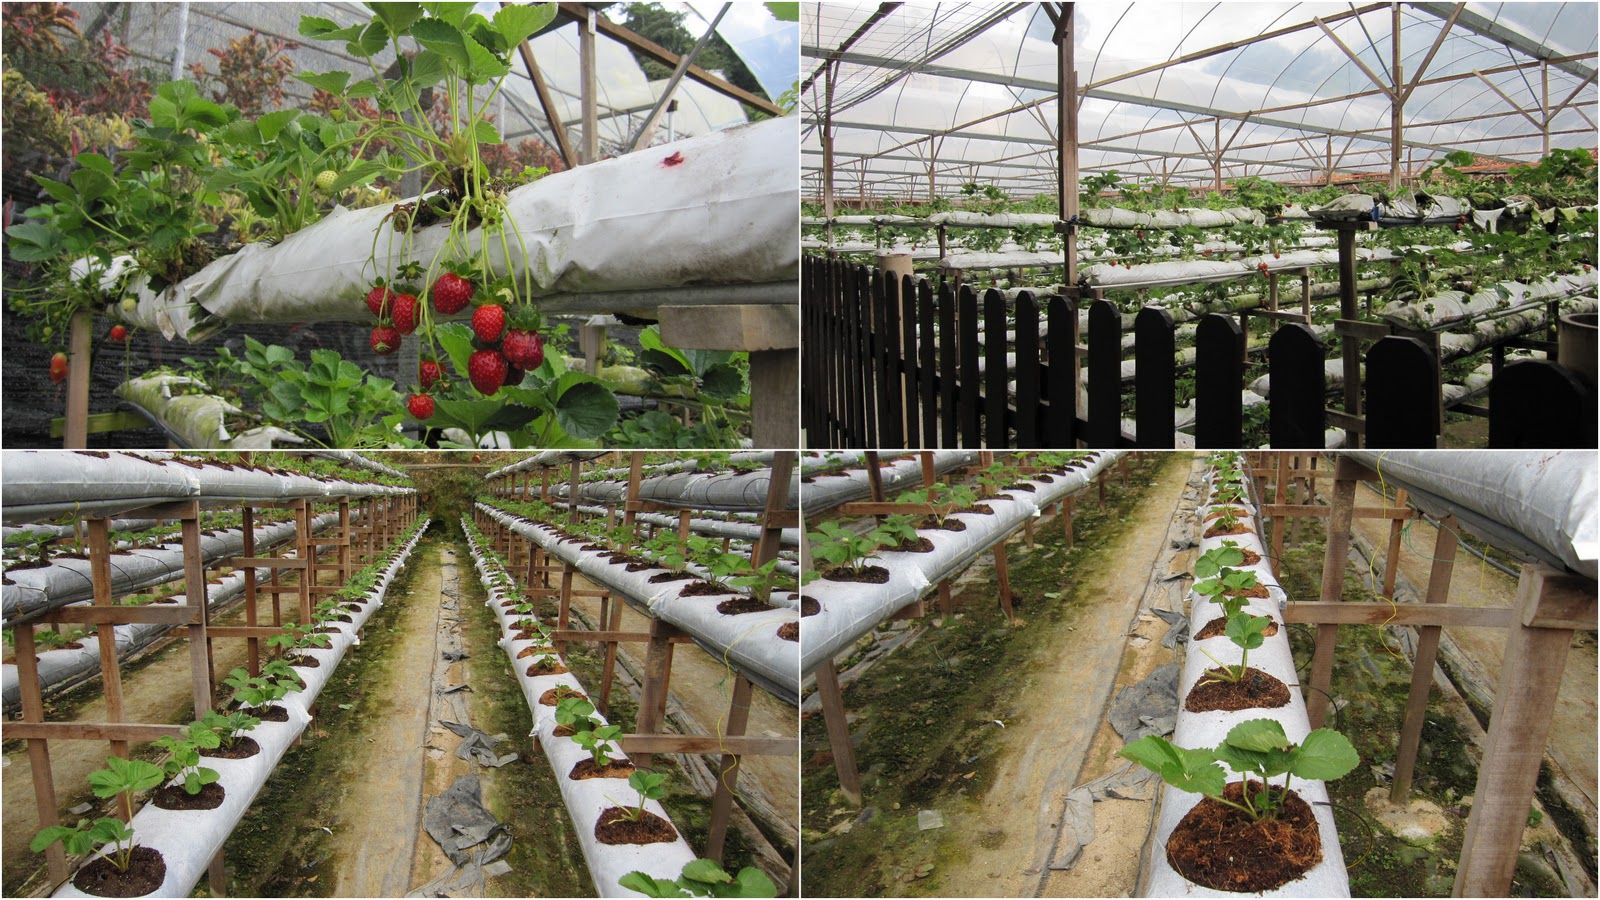 HomeMade DIY HowTo Make: Strawberry Farm Genting Highland ...